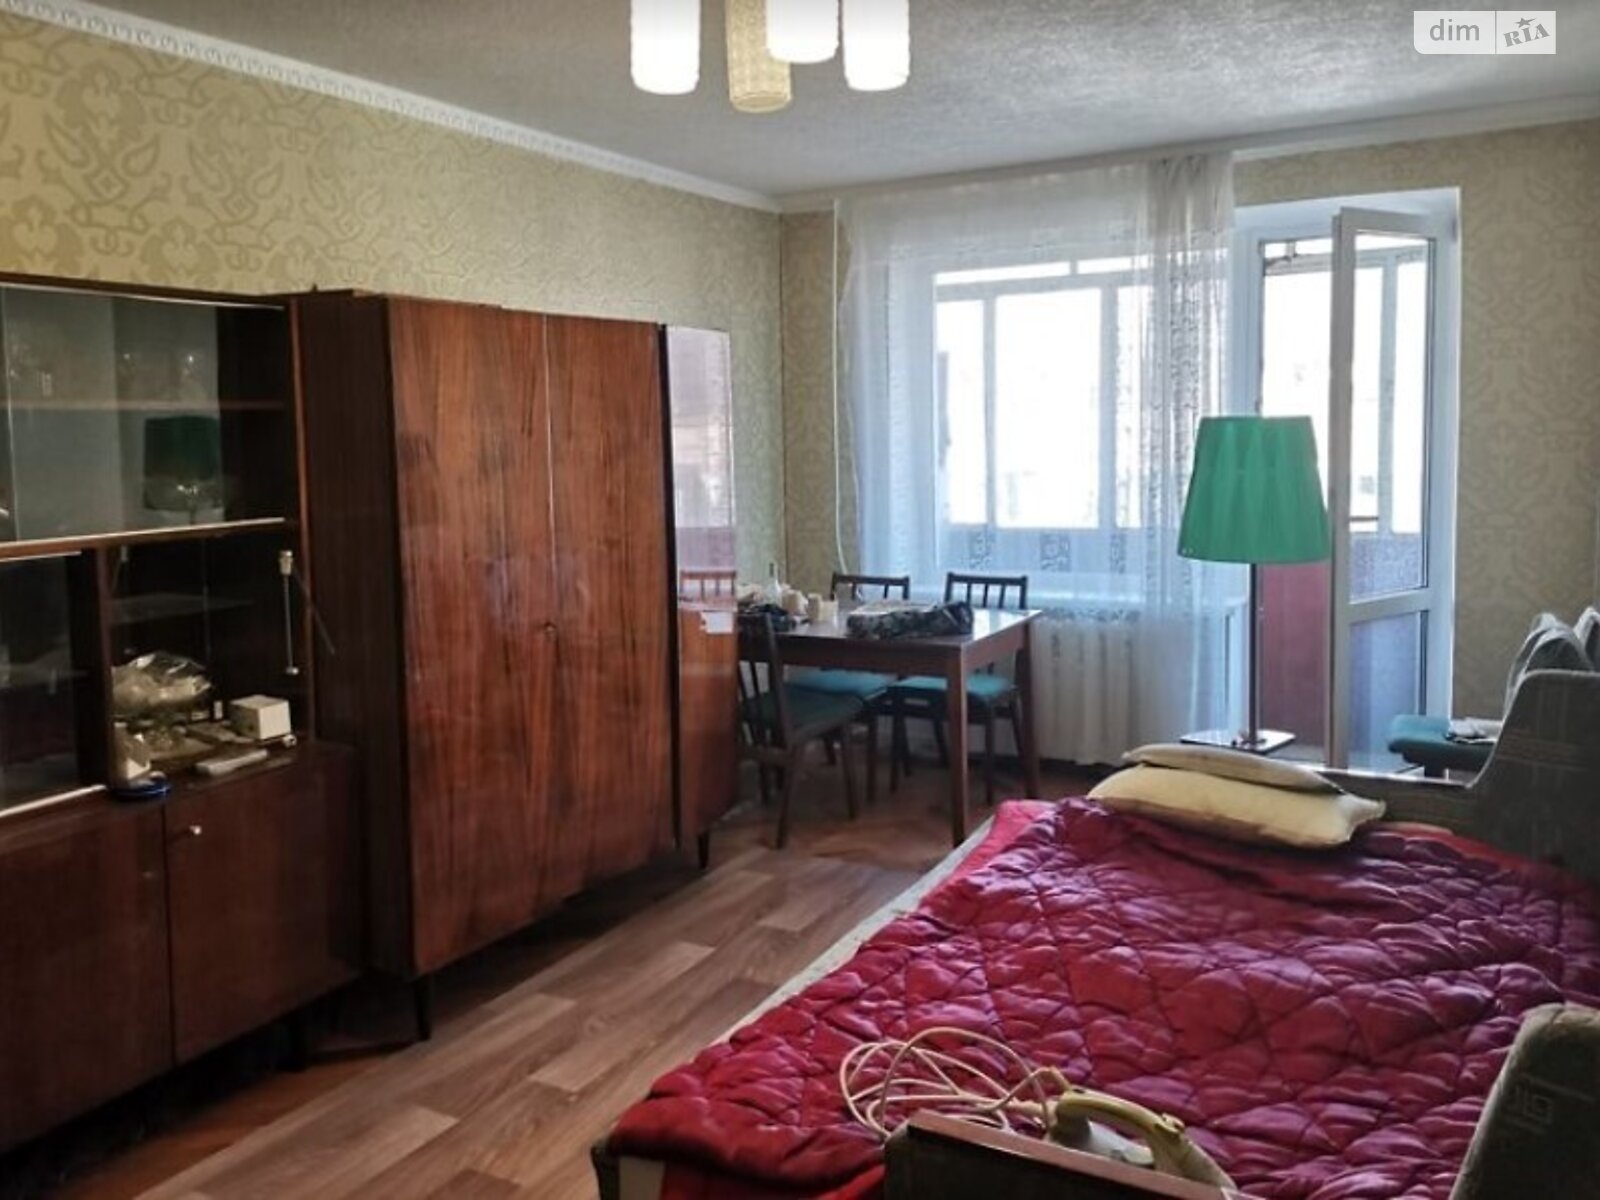 Продажа двухкомнатной квартиры в Днепре, на ул. Казакевича 6, район 12 квартал фото 1